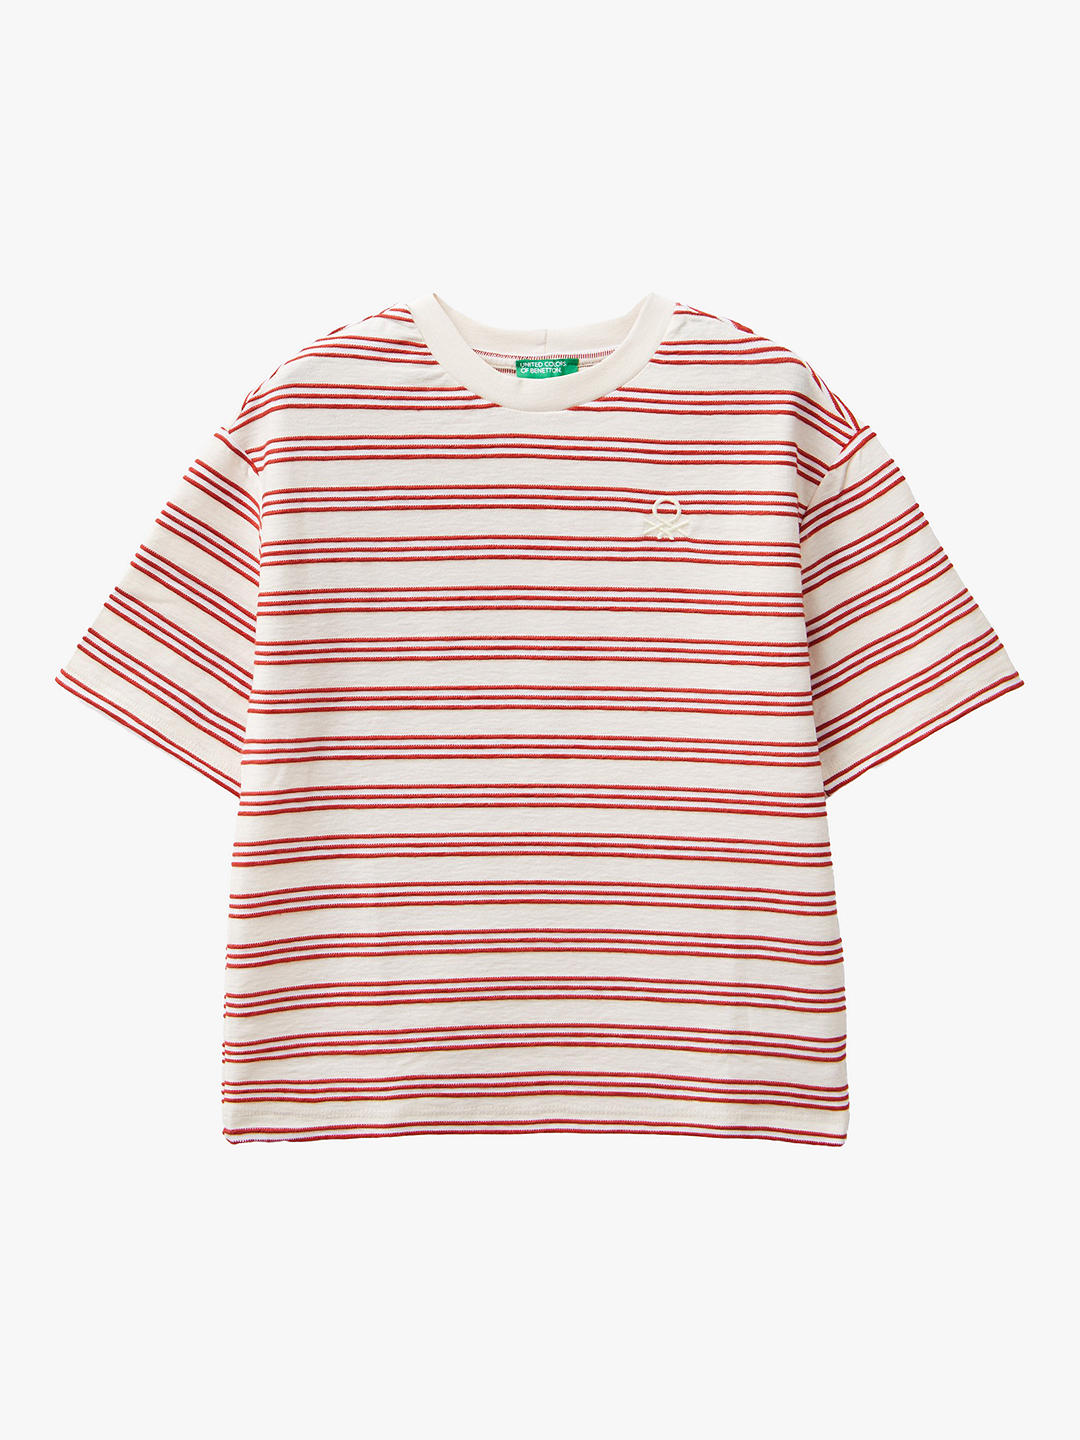 Benetton Kids' Triple Stripe T-Shirt, White Cream